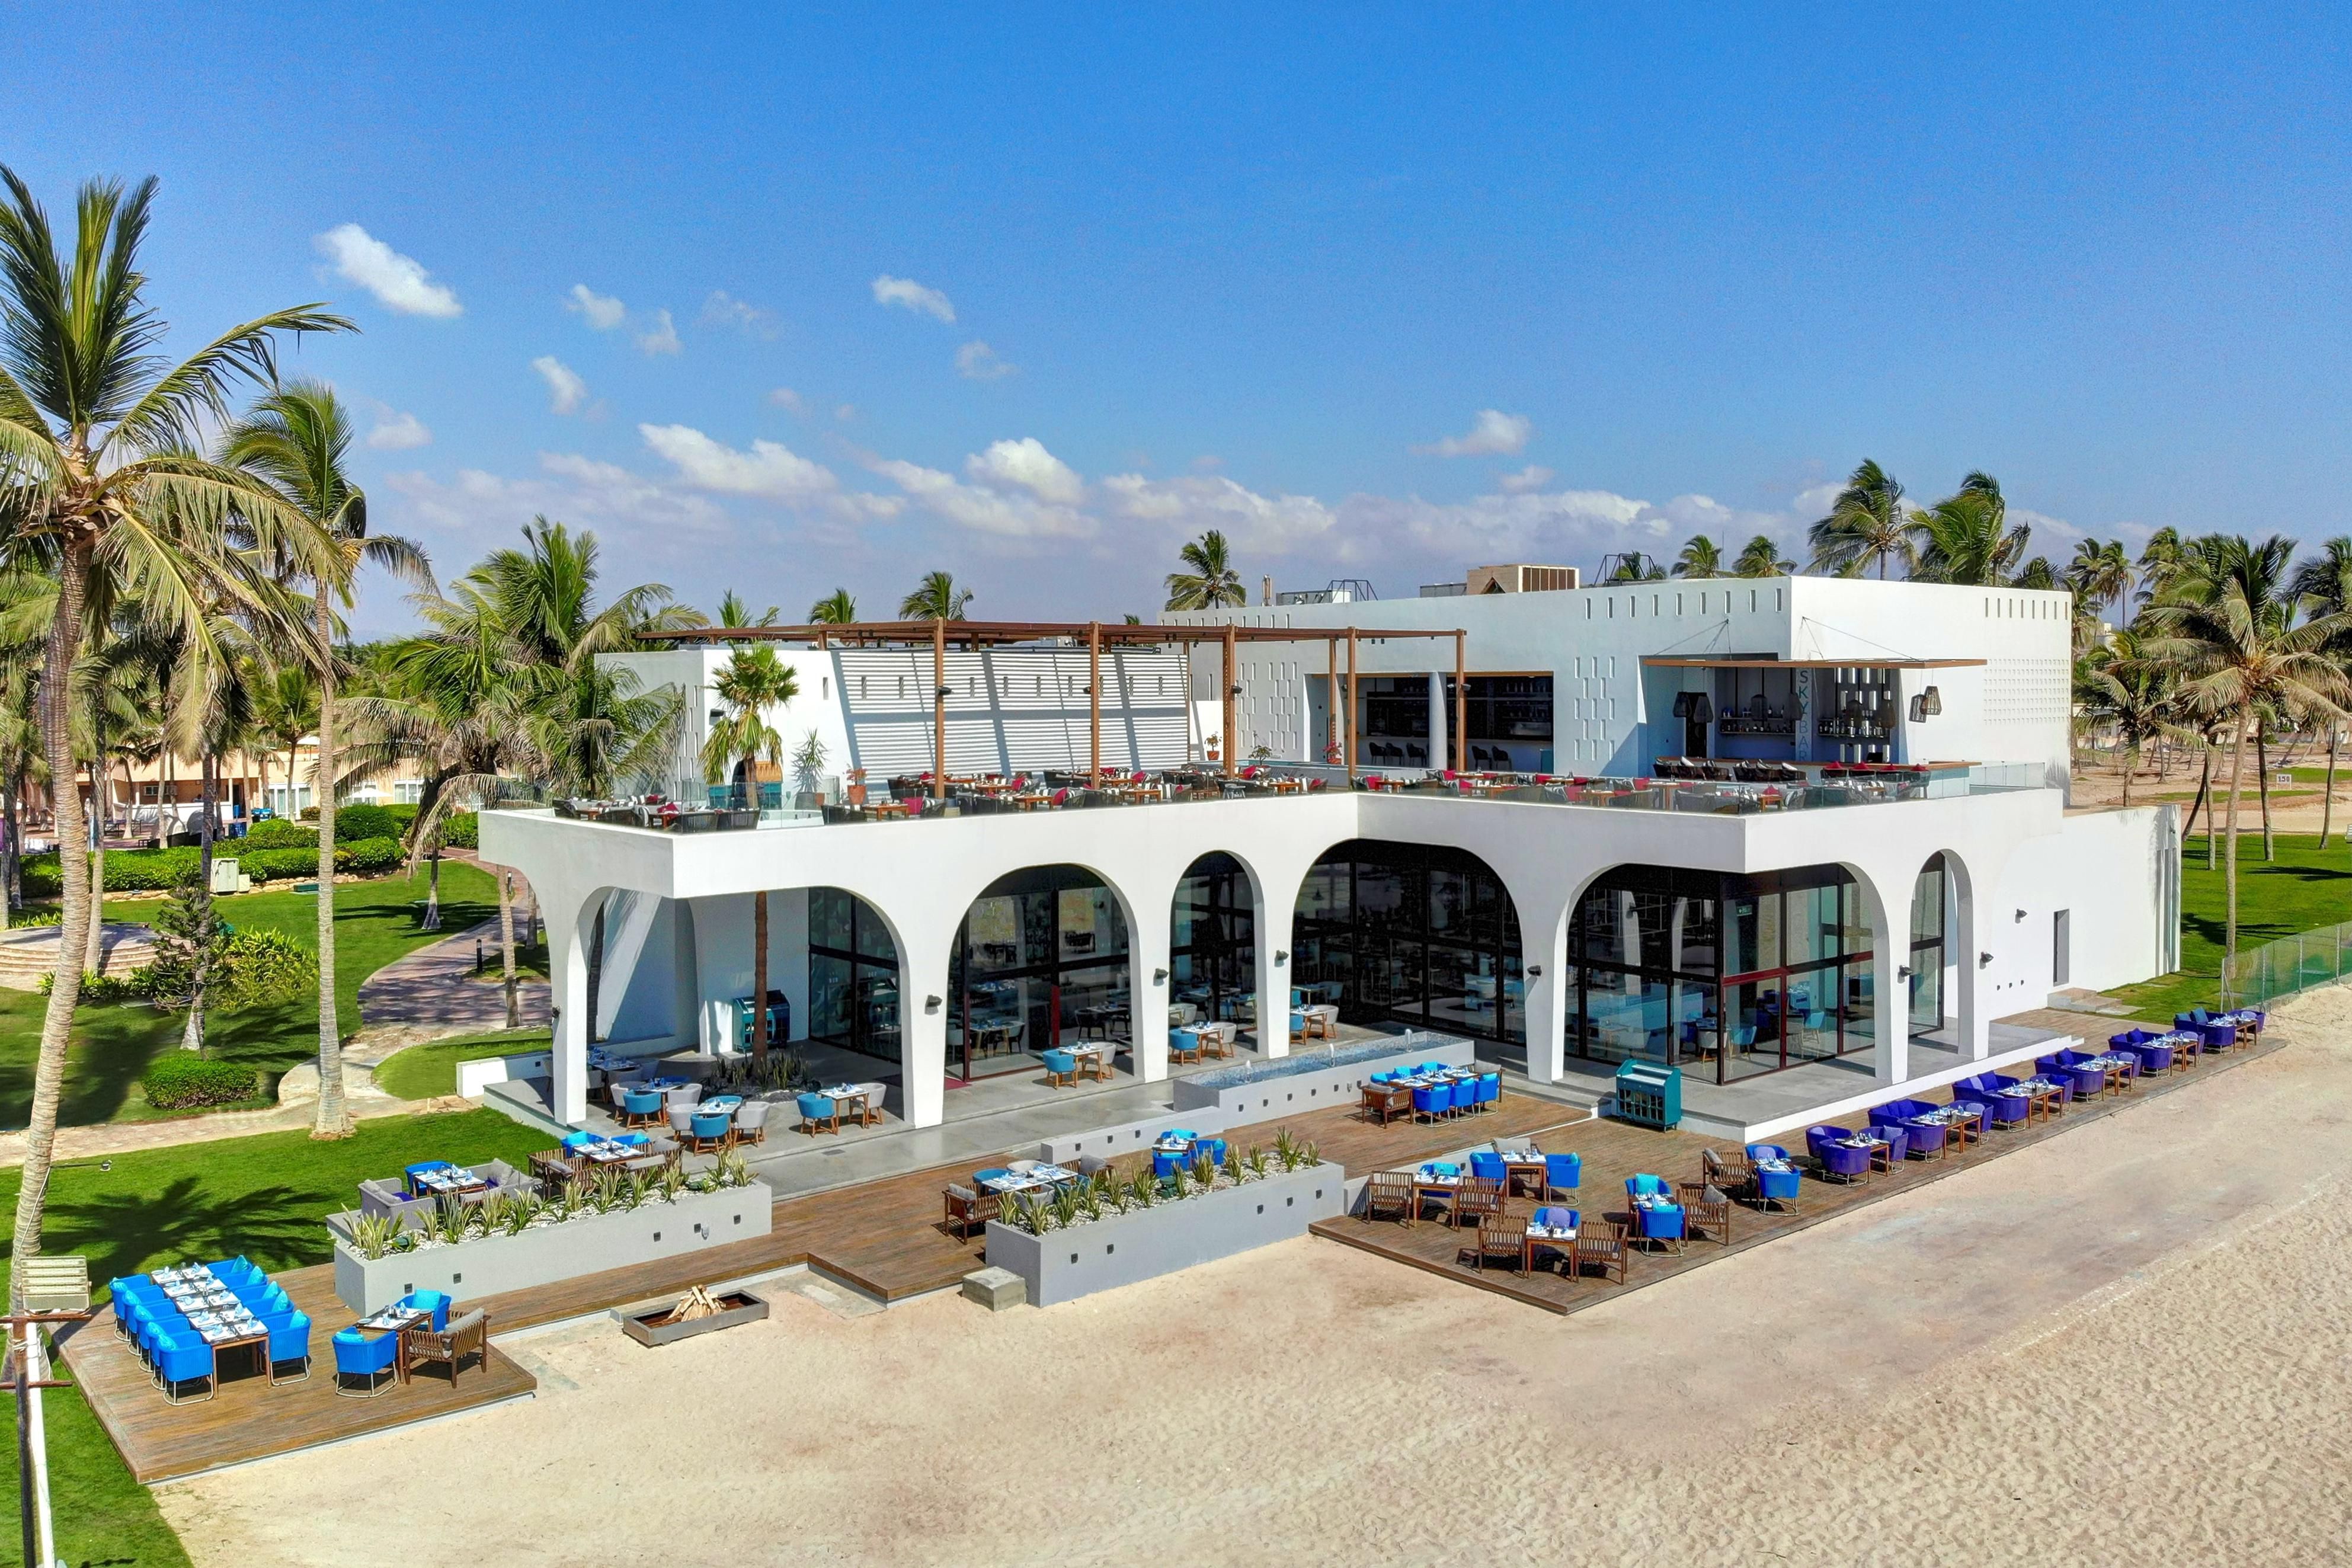 A modern and unique beachside restaurant